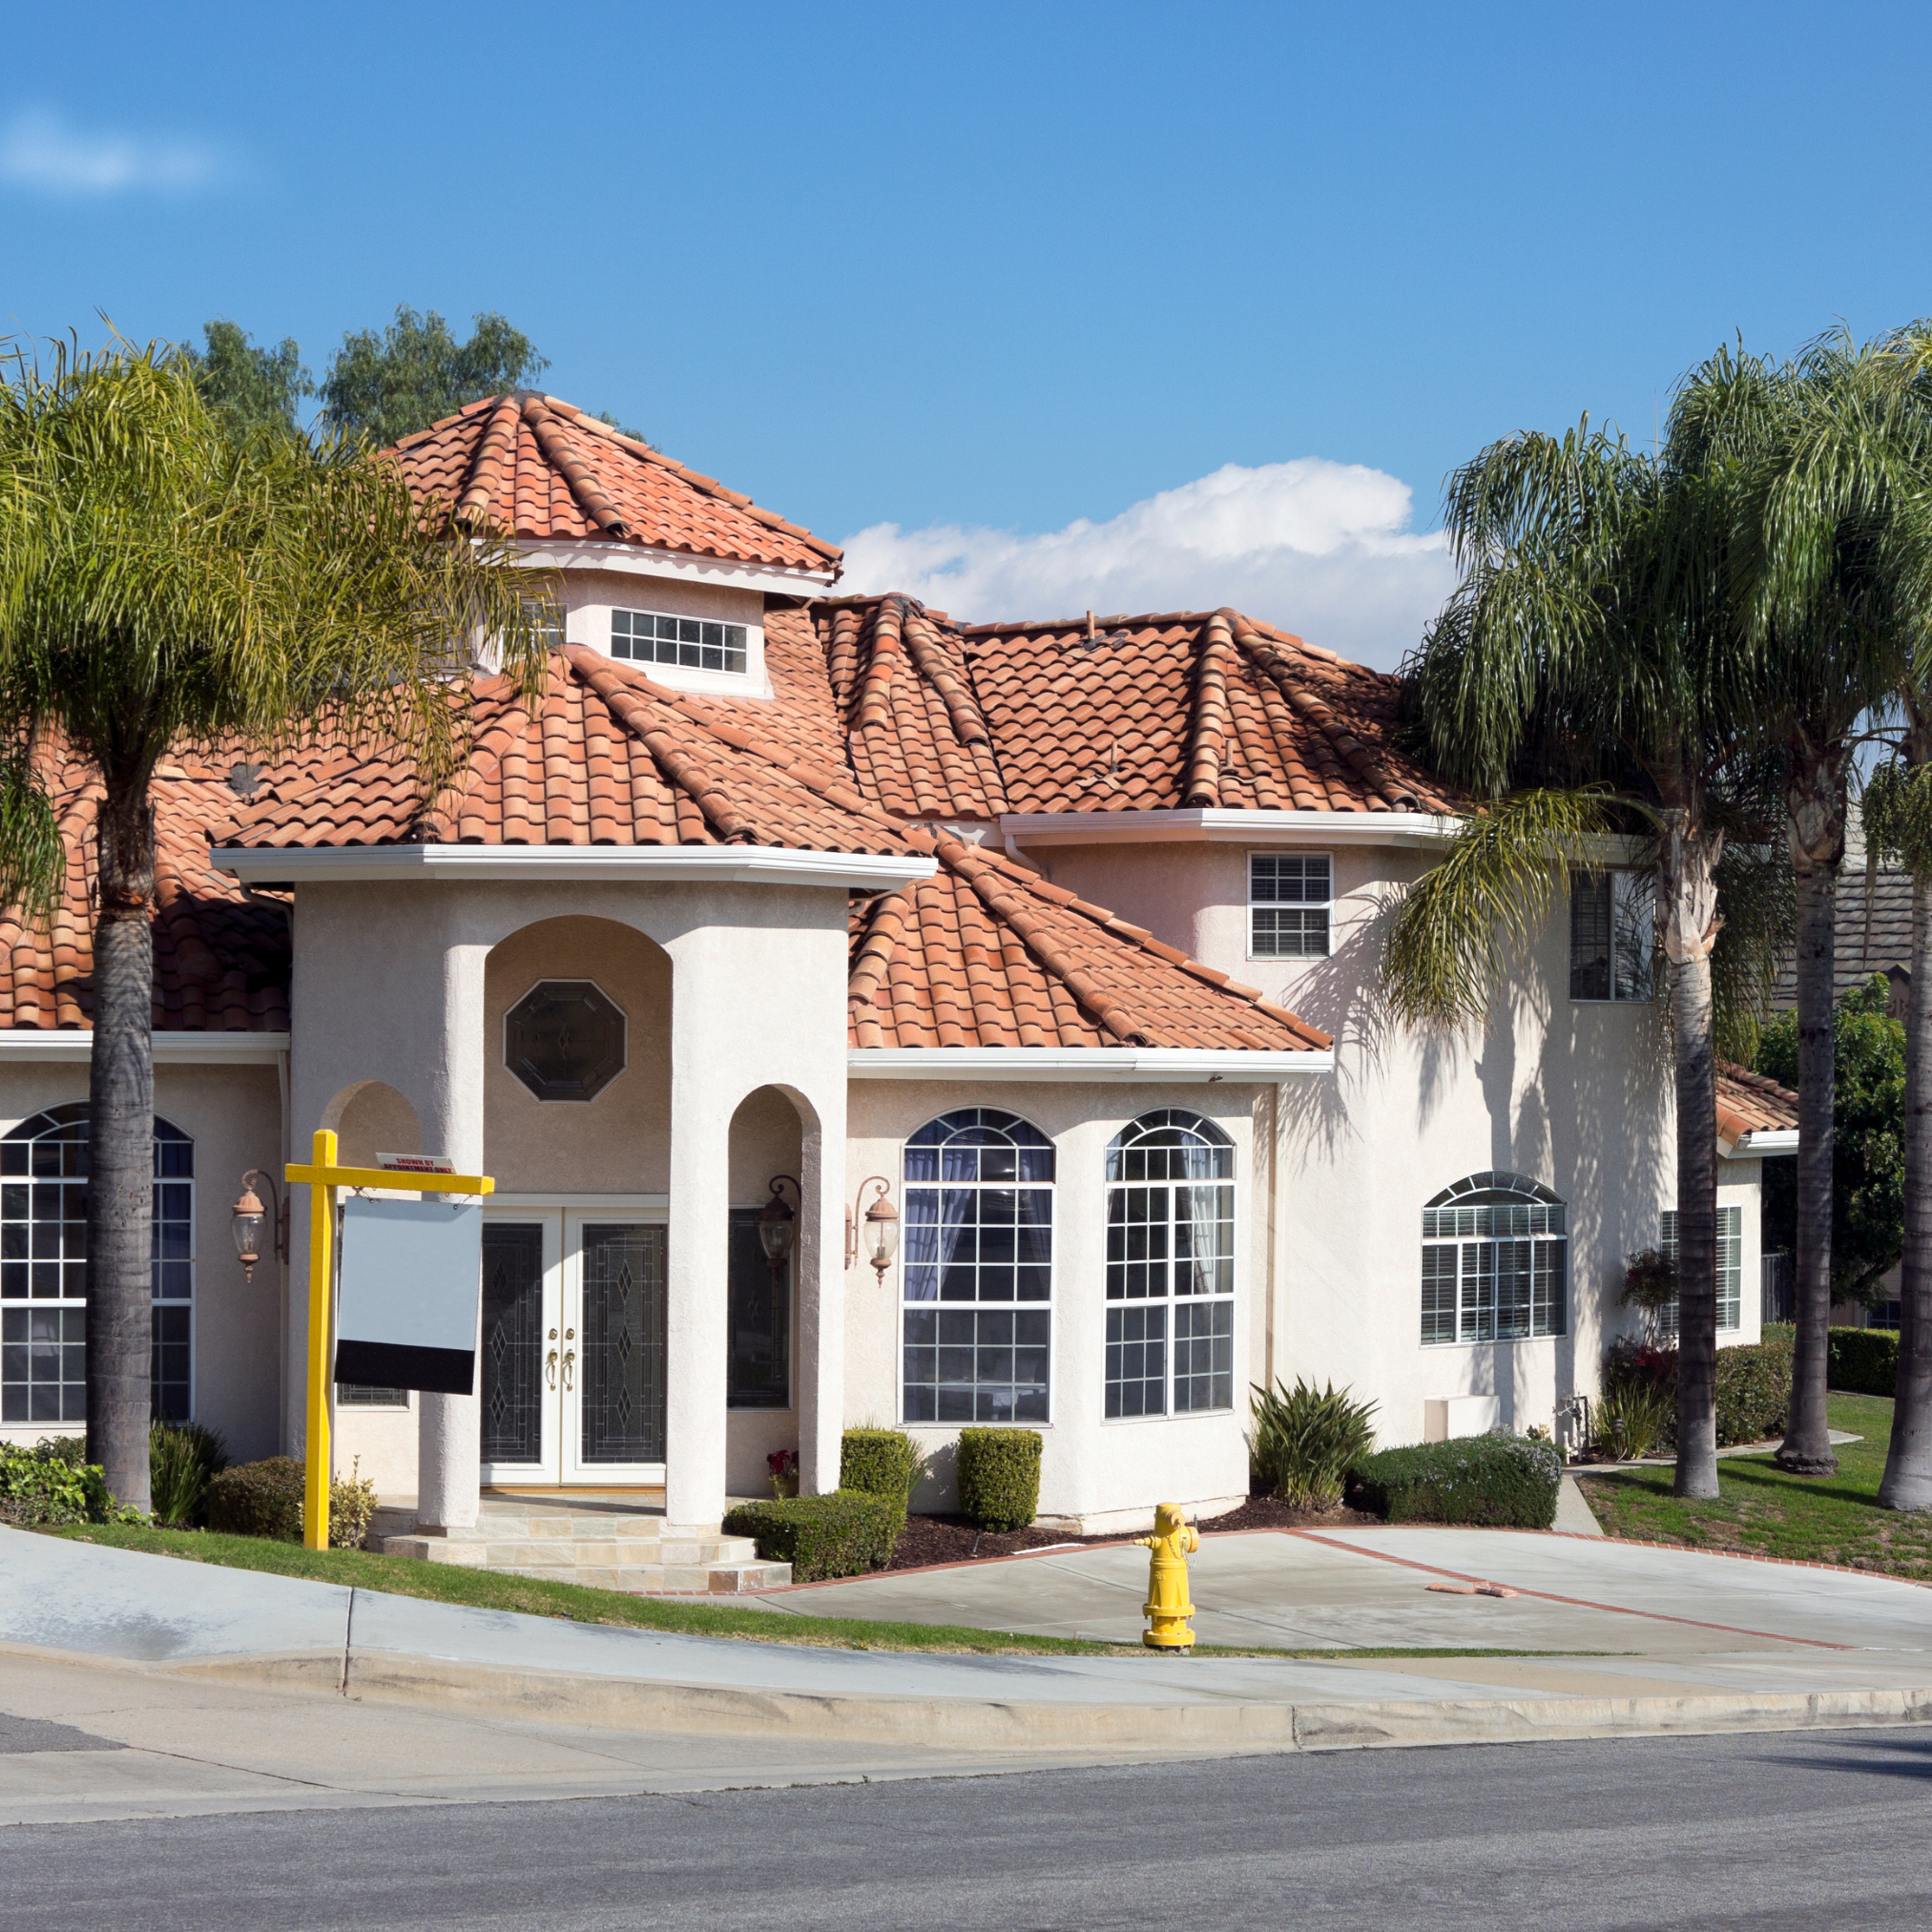 California Housing Market: Resilience Amid Rising Rates